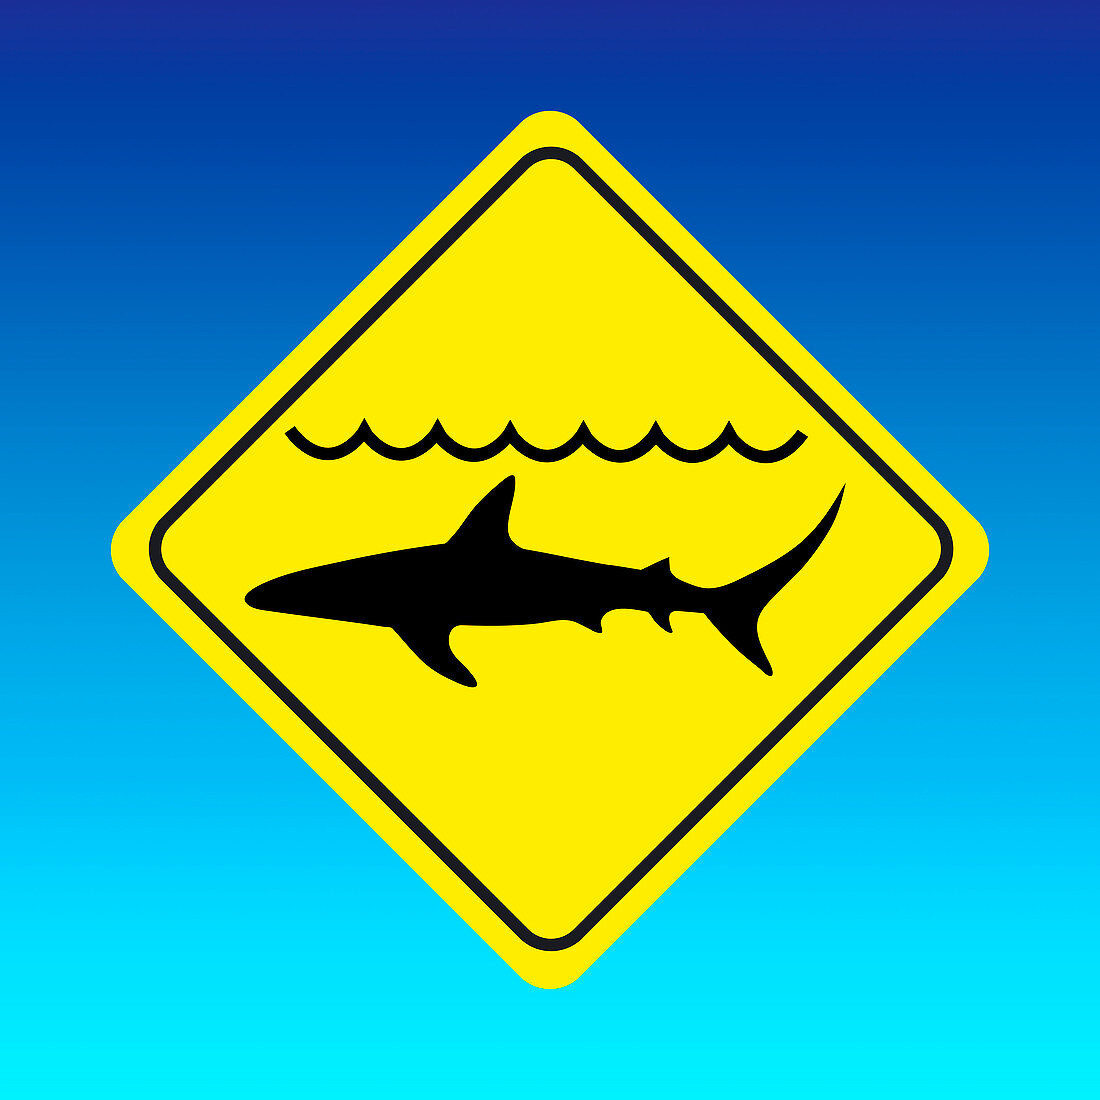 Shark warning sign,computer artwork